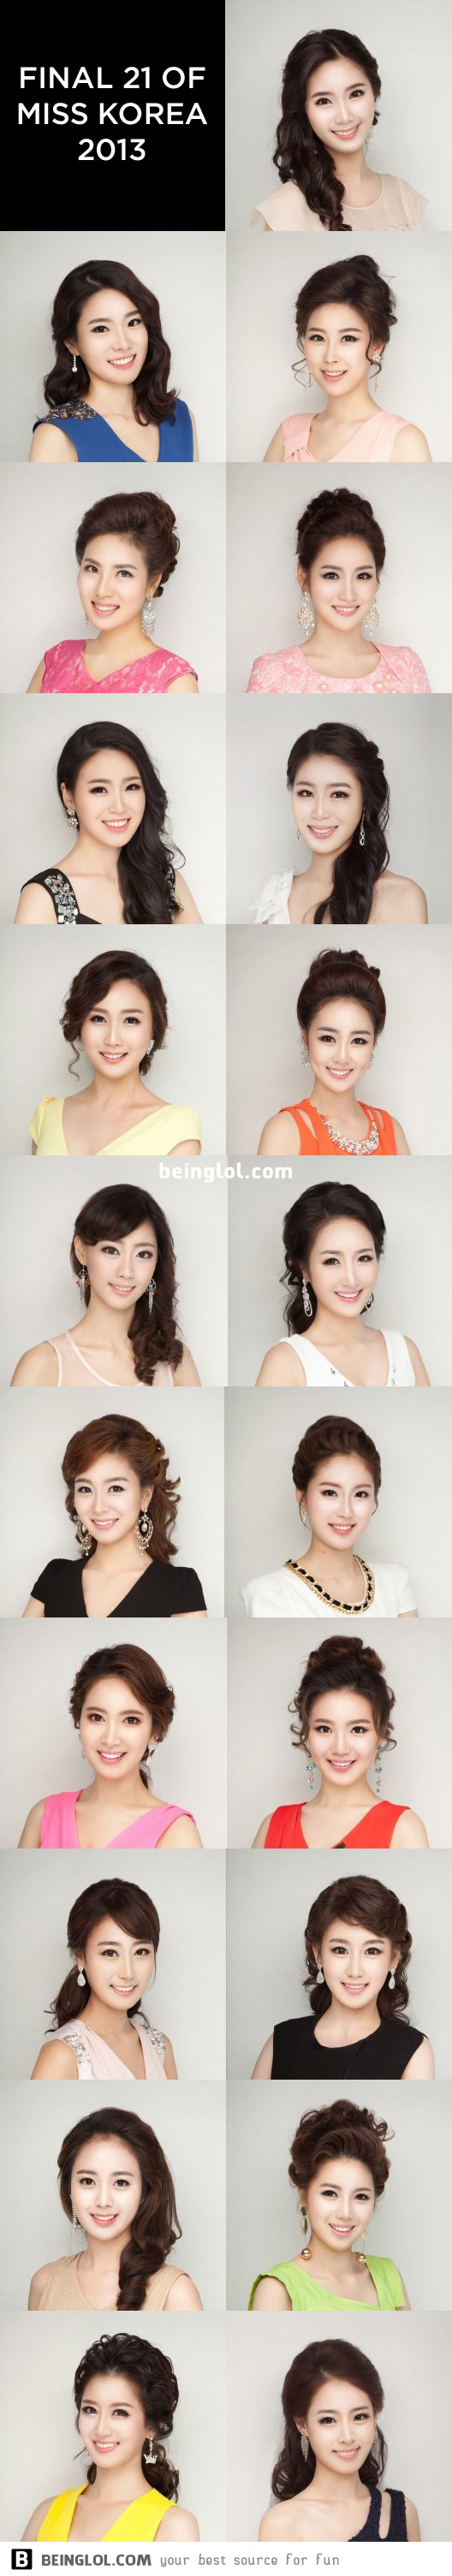 Final 21 of Miss Korea 2013